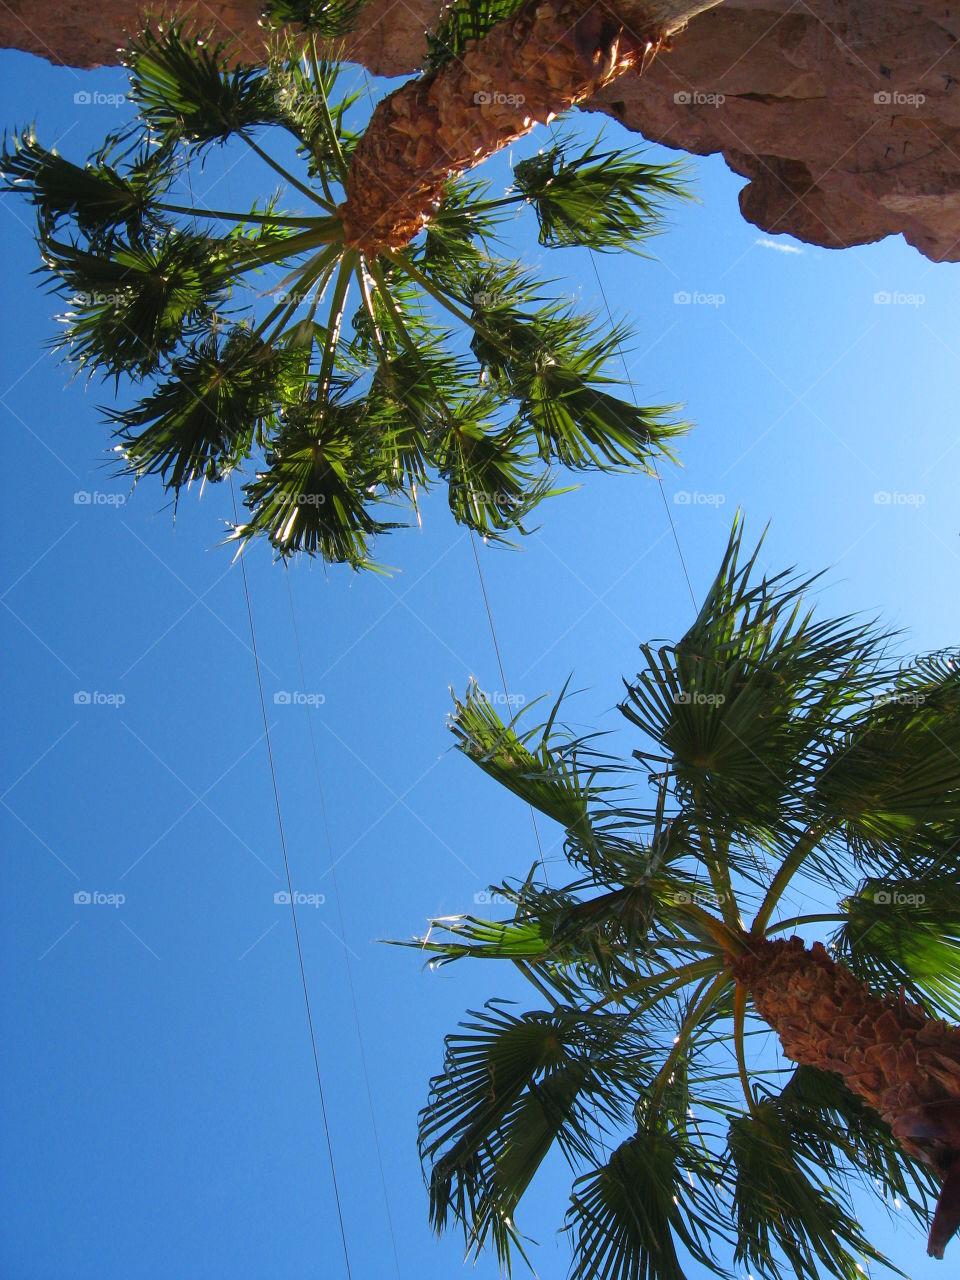 Looking up at towering palms. Looking up at towering palm trees